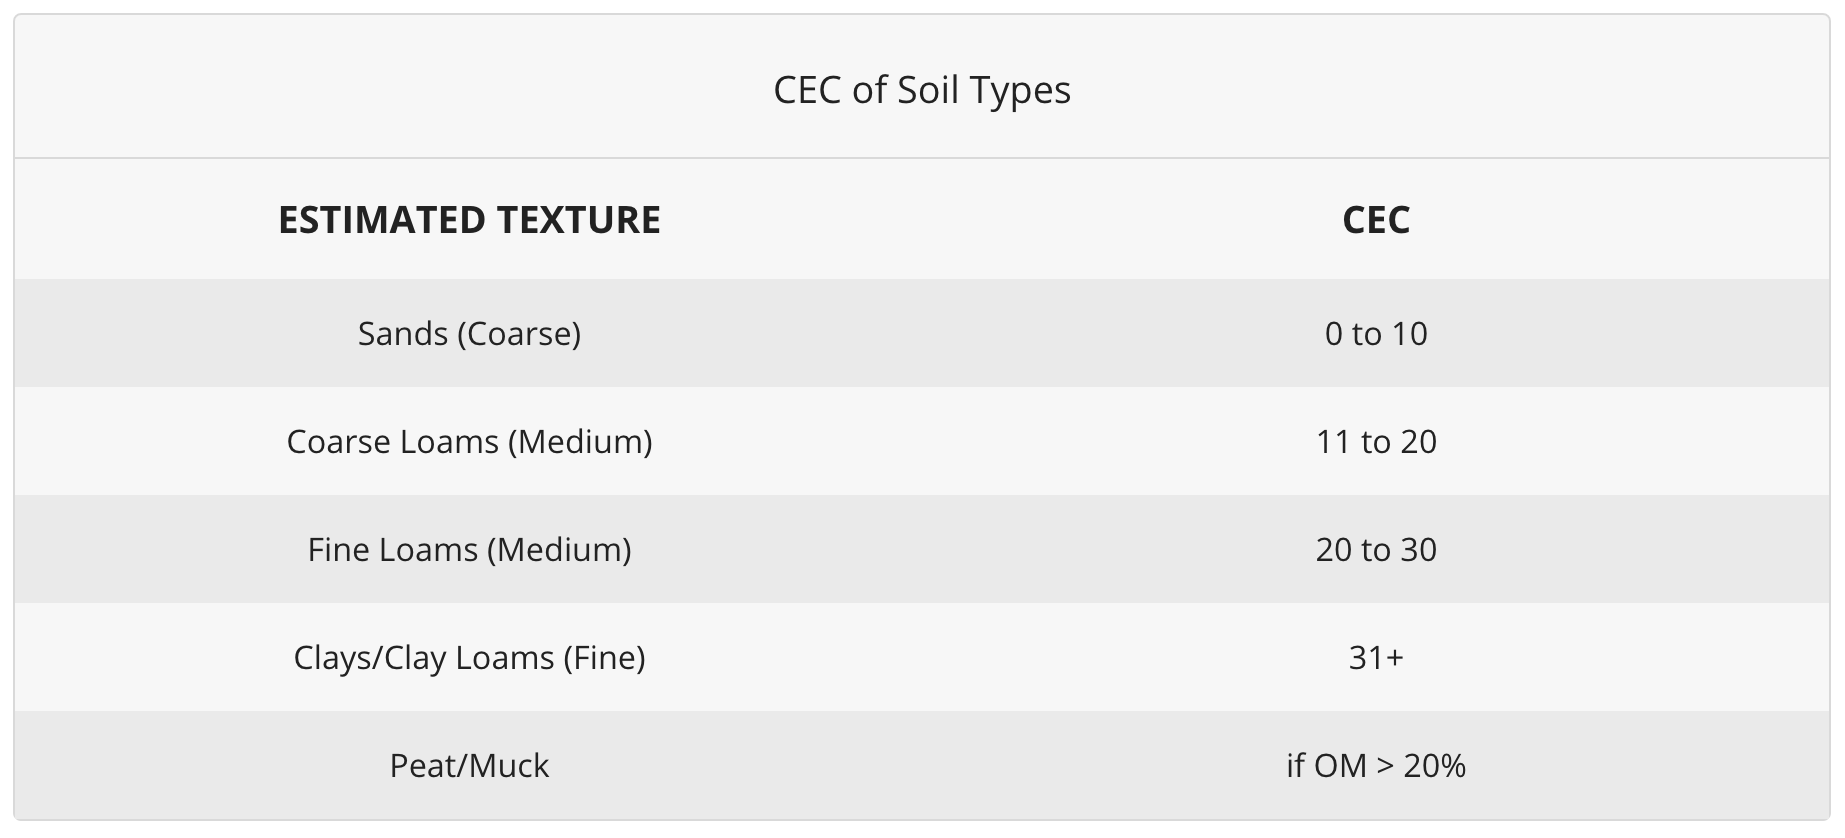 CEC of Soil Types